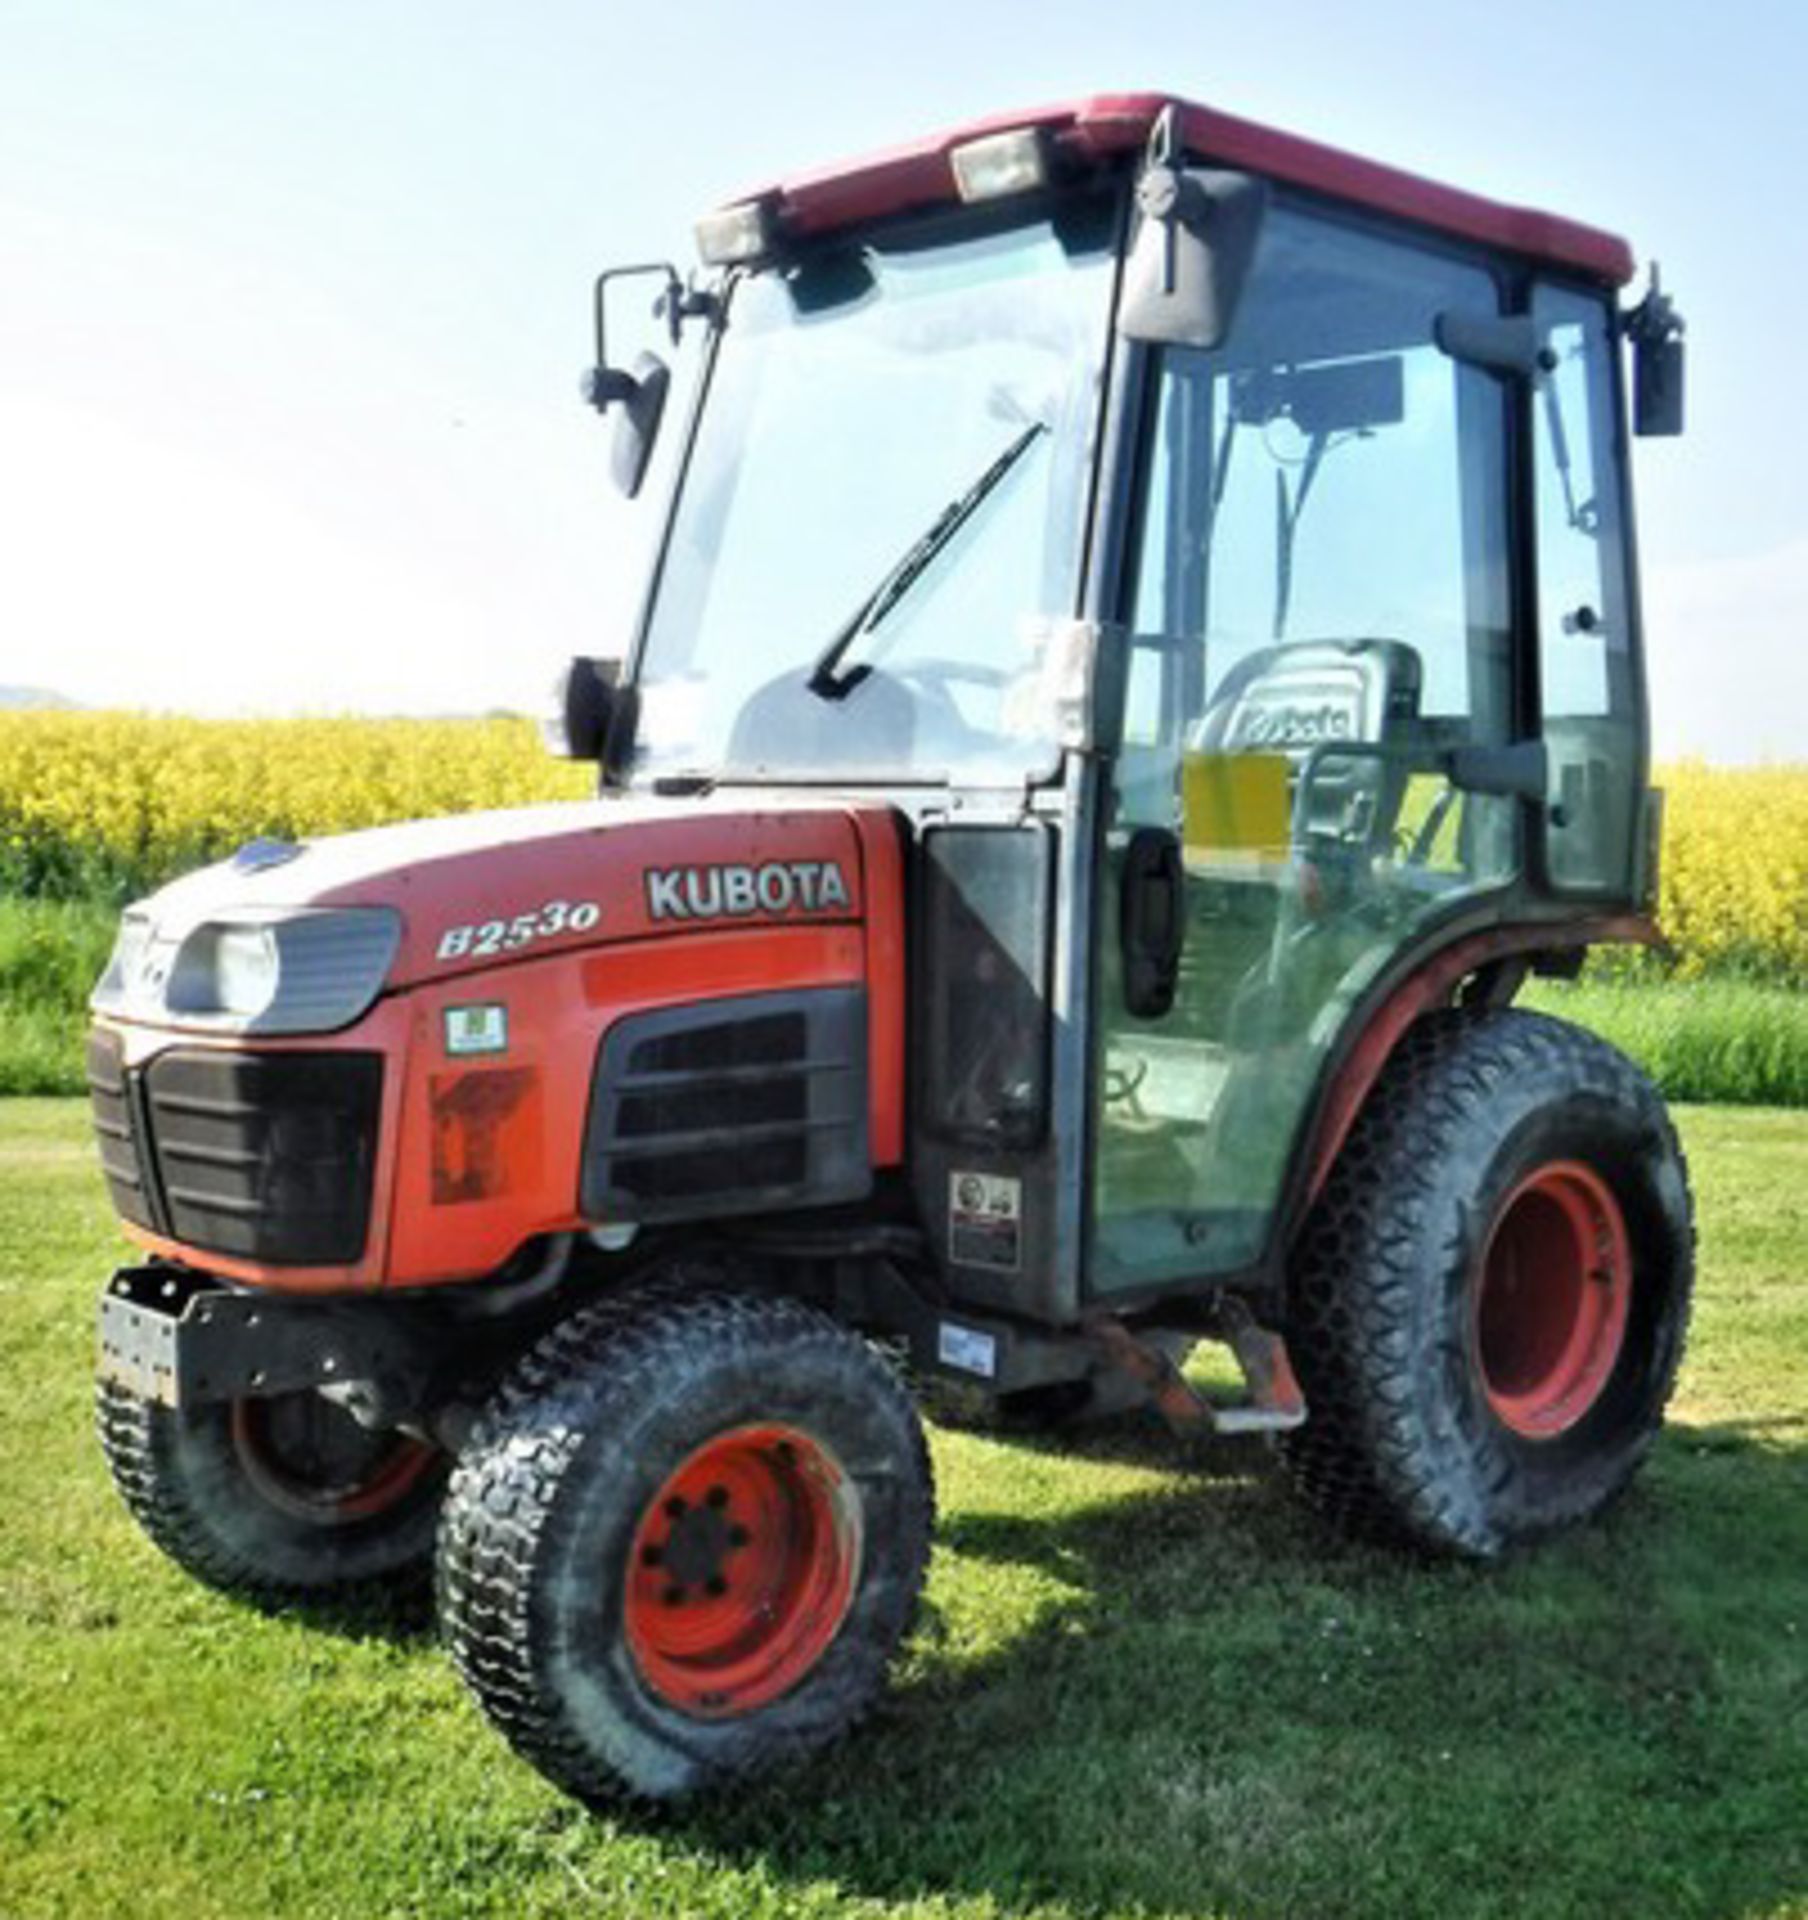 2009 KUBOTA 2530 Mini Tractor - Reg No SN59 EKA. 789hrs (not verified)